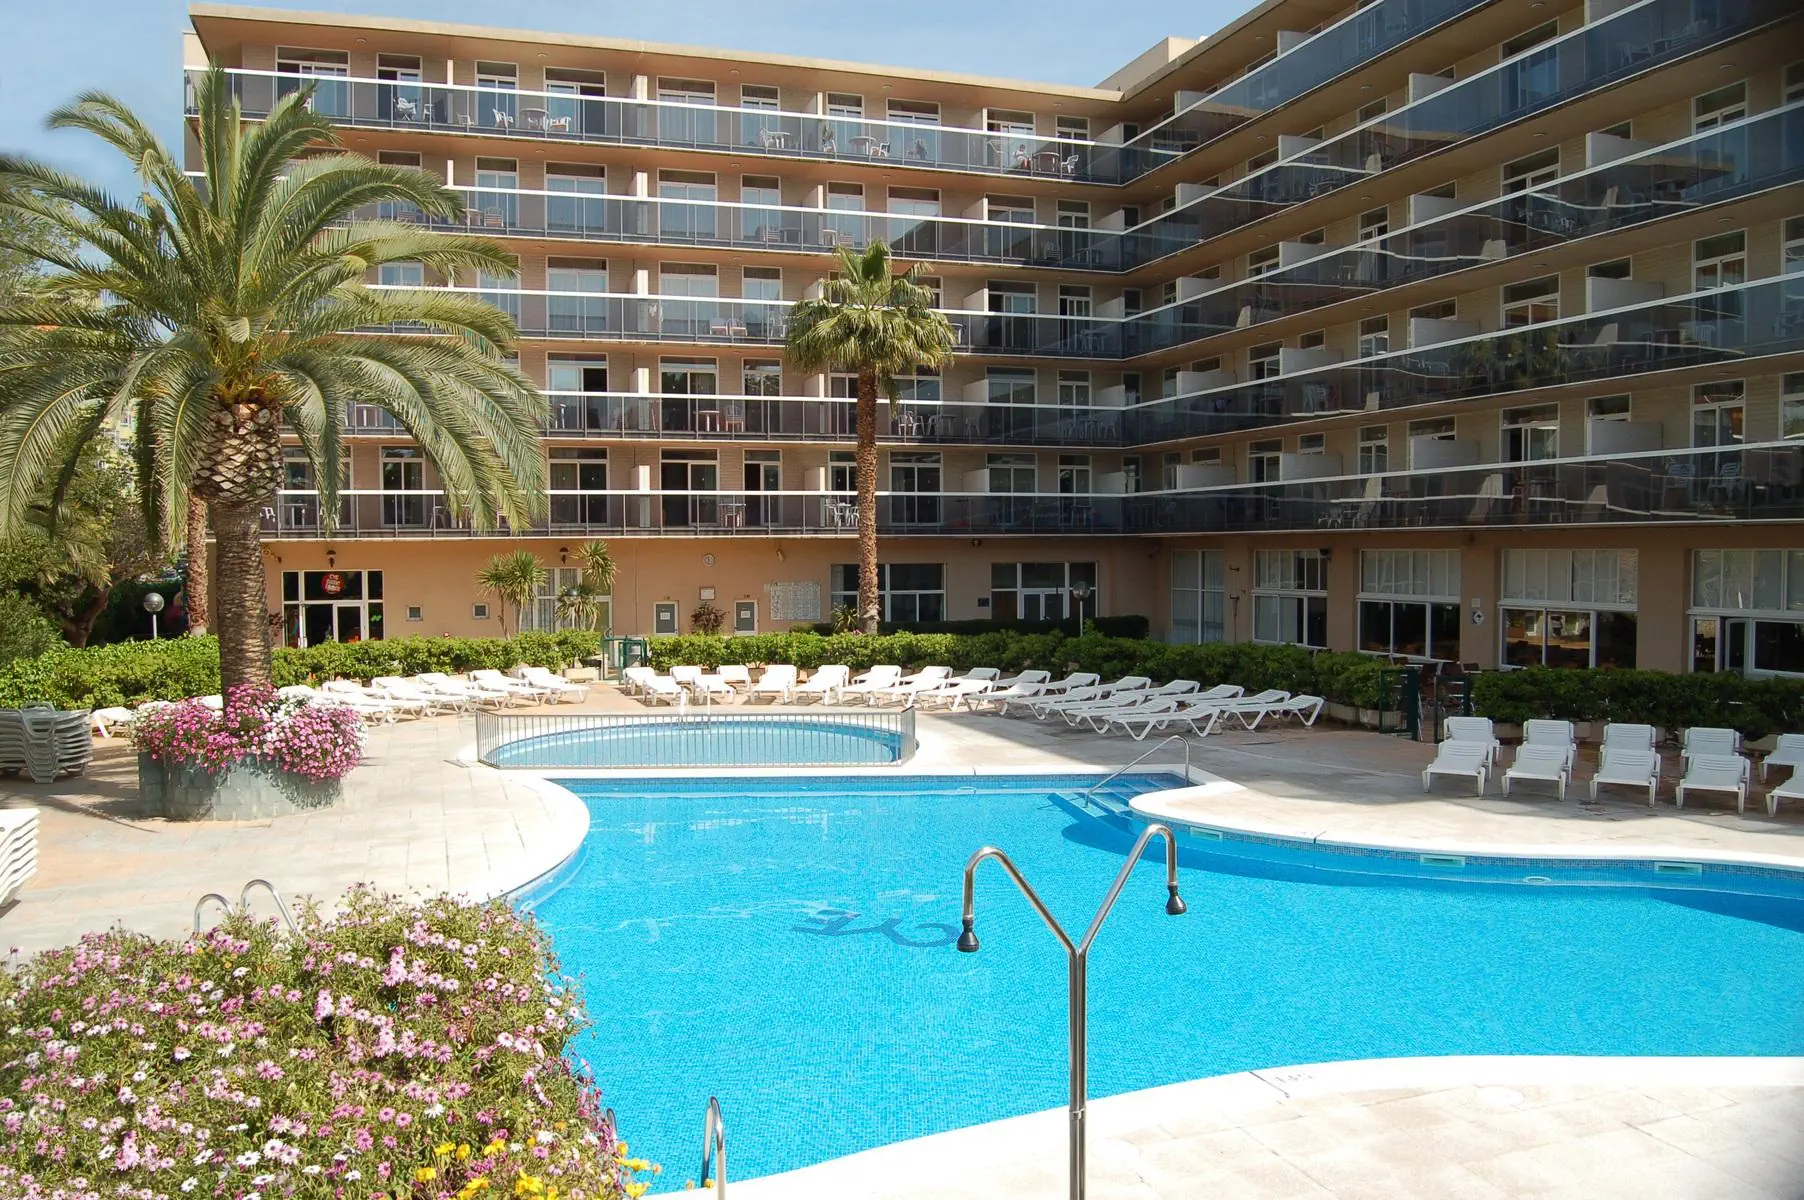 Hiszpania Costa Dorada Salou Aparthotel CYE Holiday center